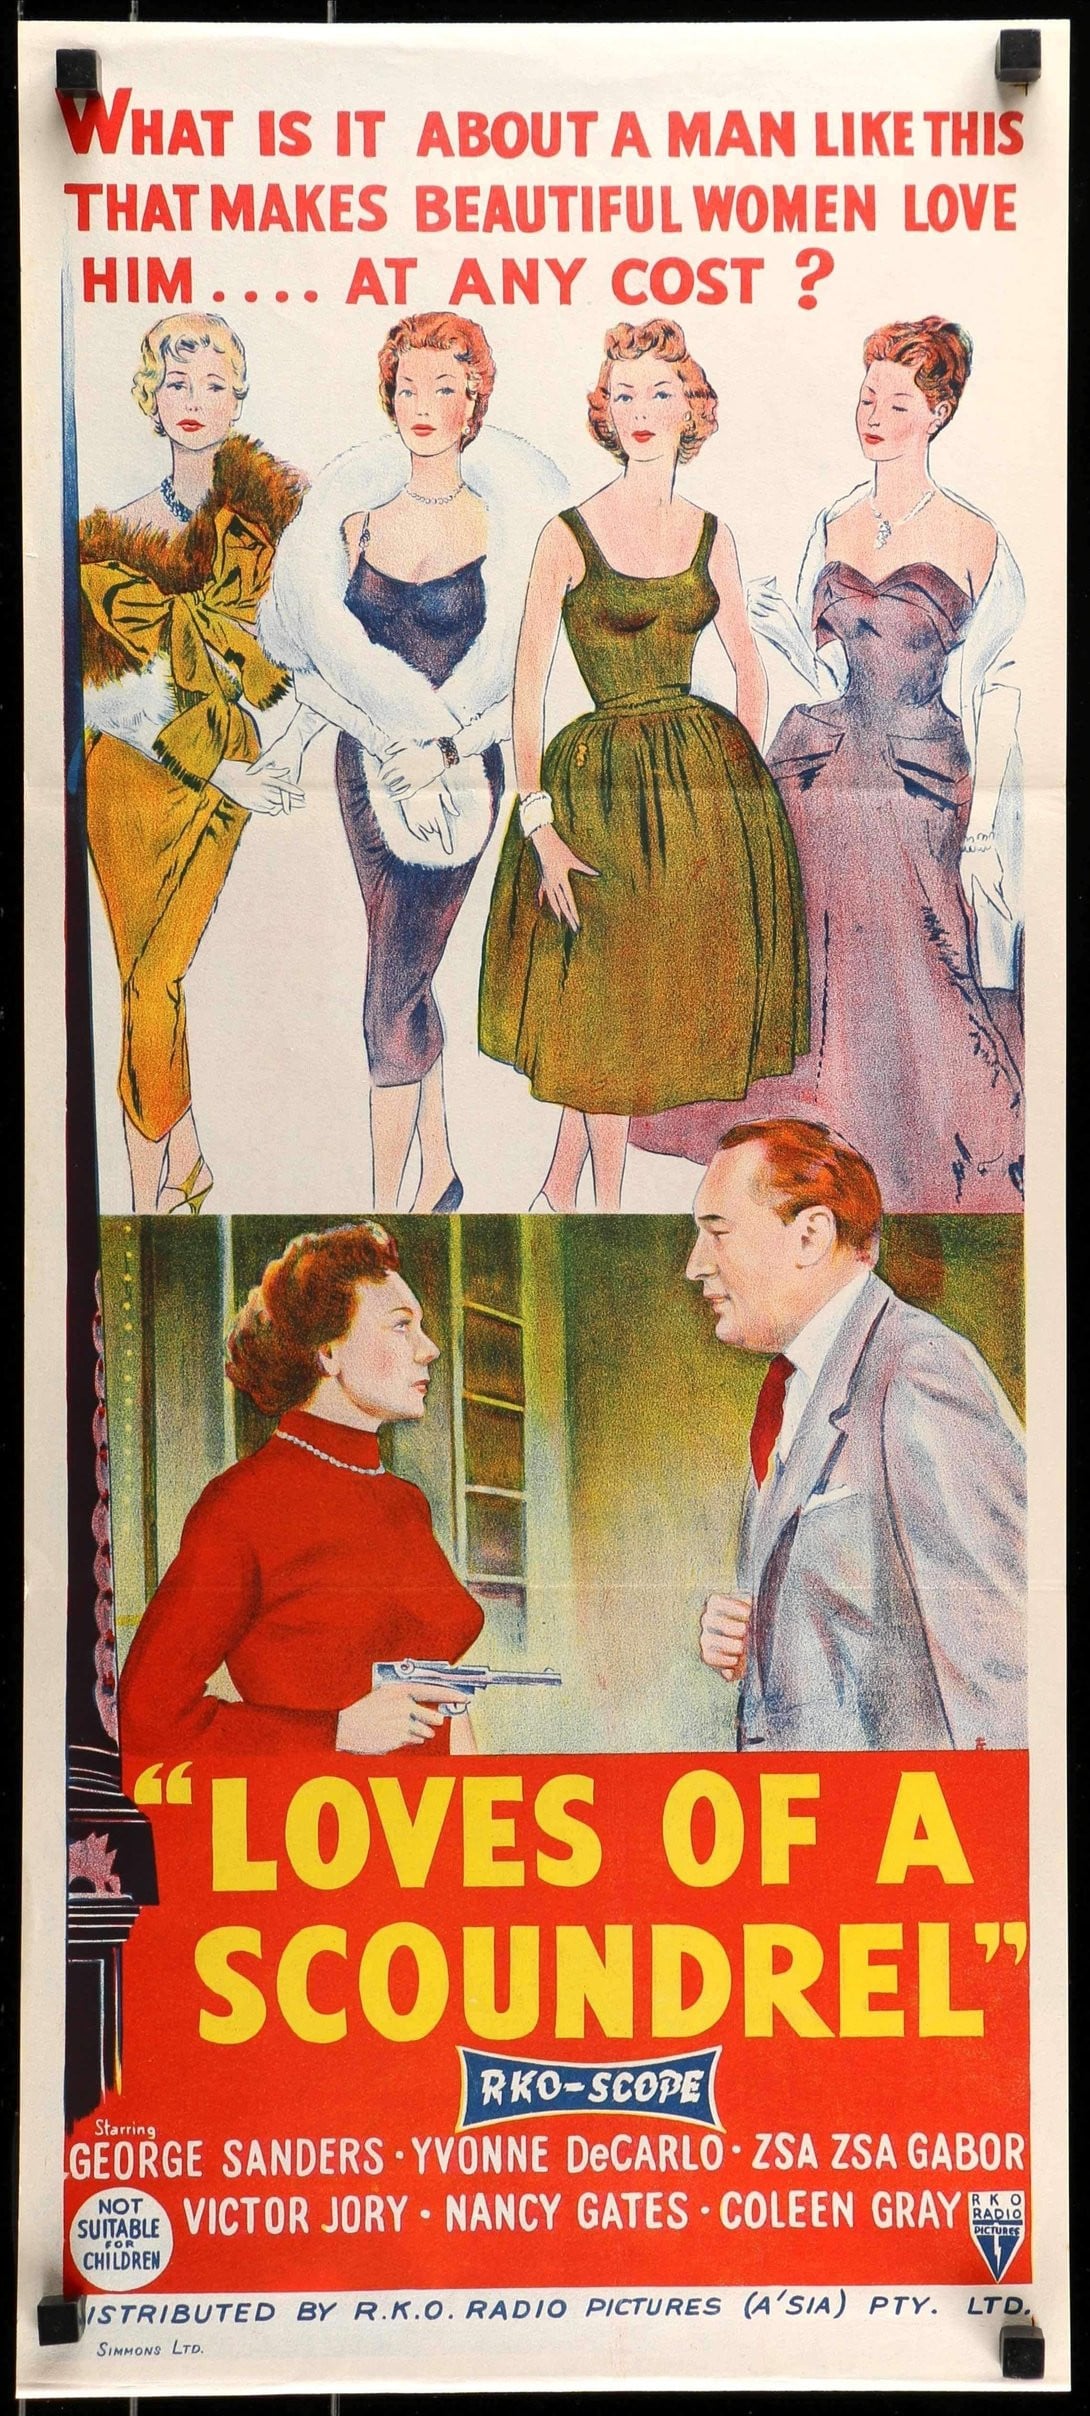 Death of a Scoundrel (1956) original movie poster for sale at Original Film Art